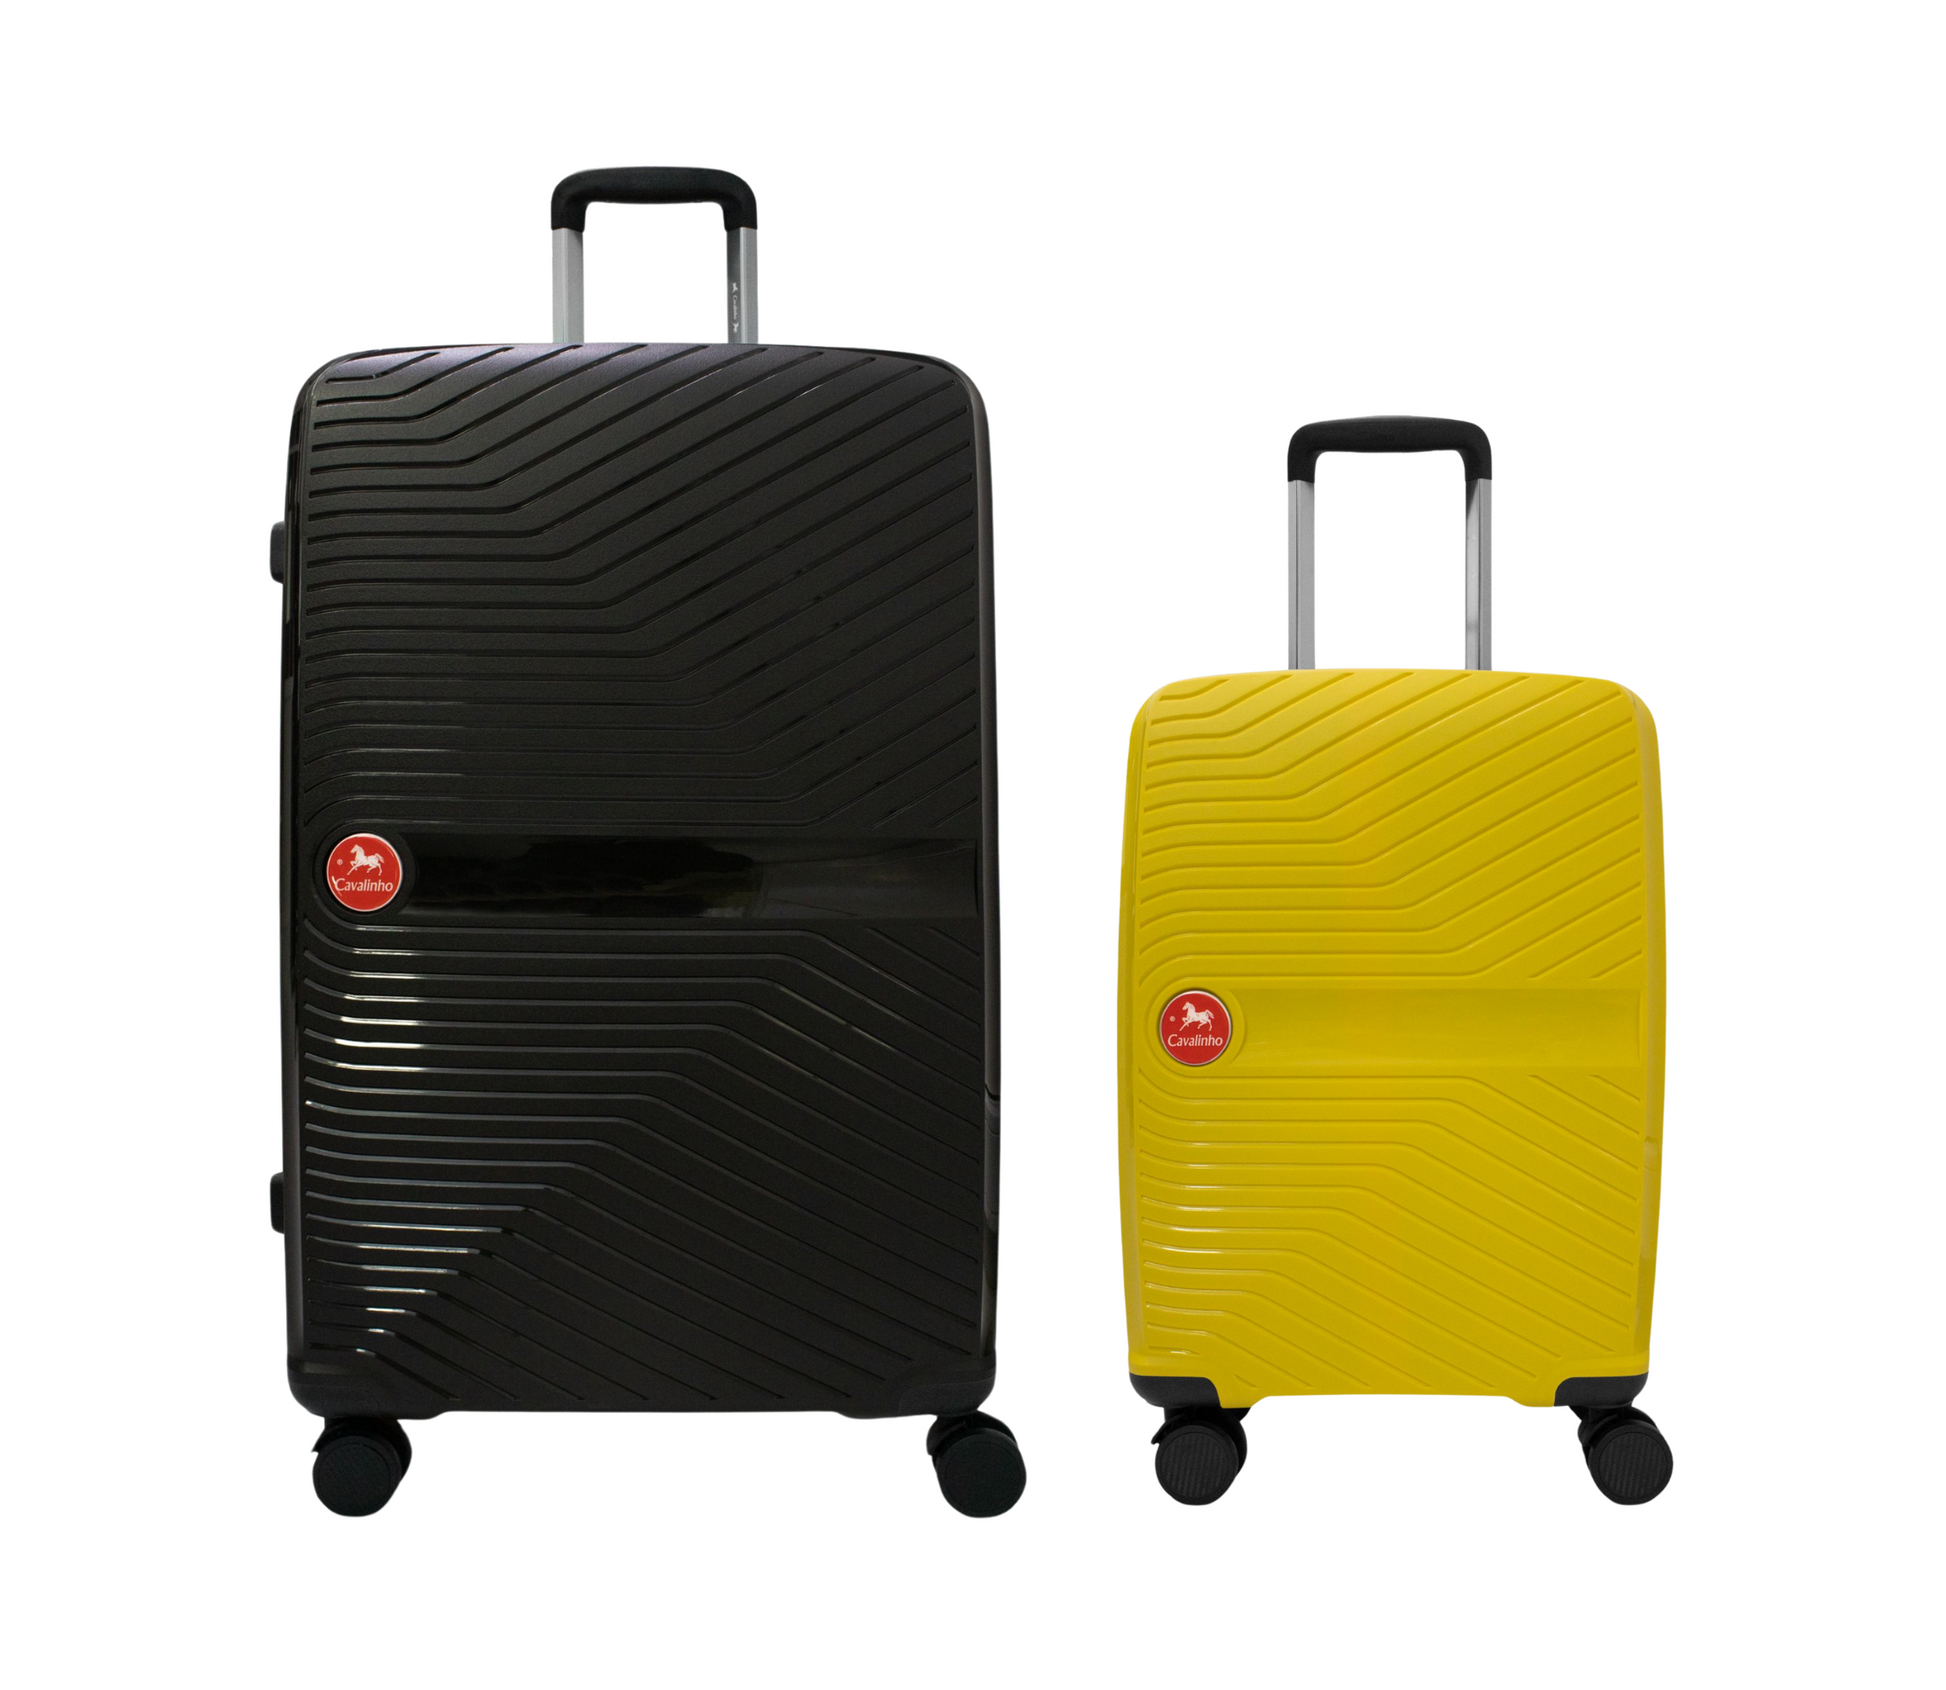 Cavalinho Colorful 2 Piece Luggage Set (19" & 28") - Yellow Black - 68020004.0801.S1928._1